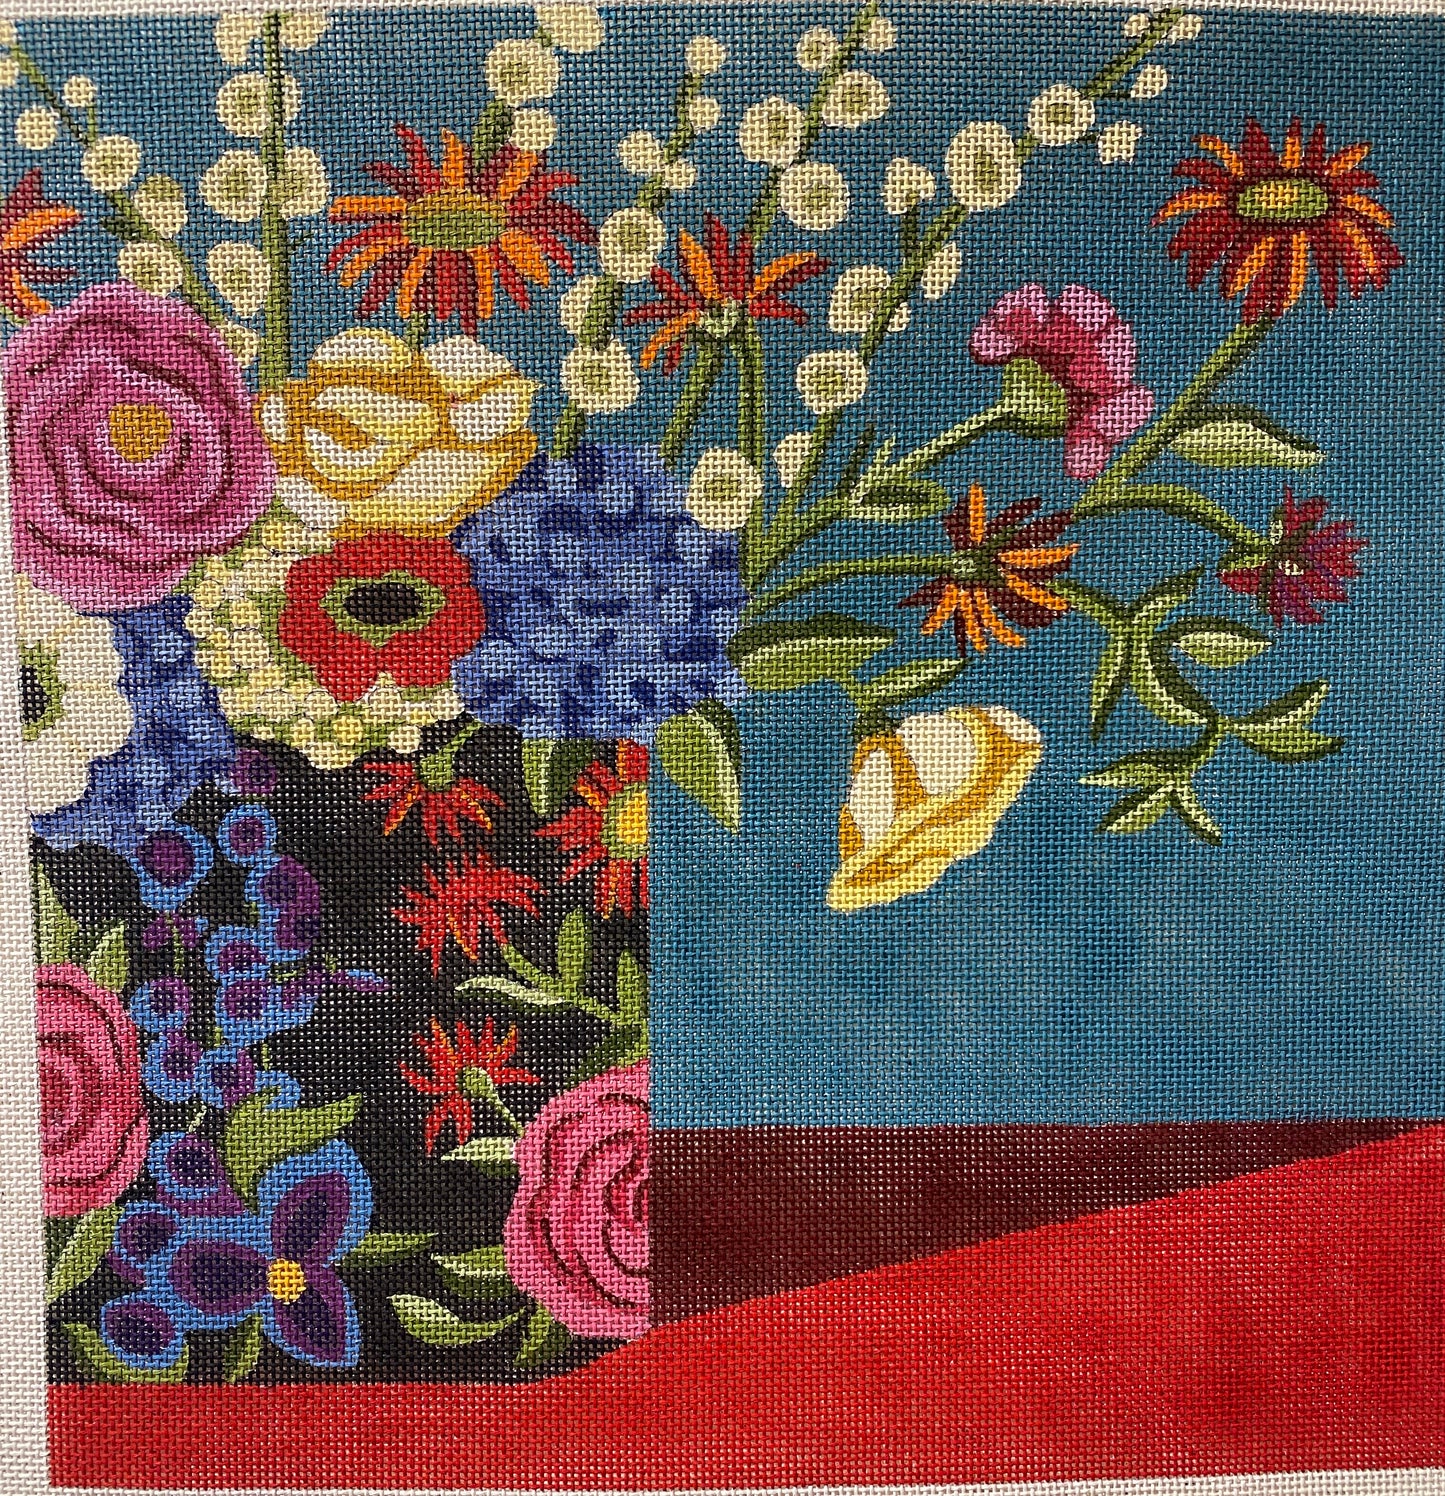 Flowers in Floral Vase